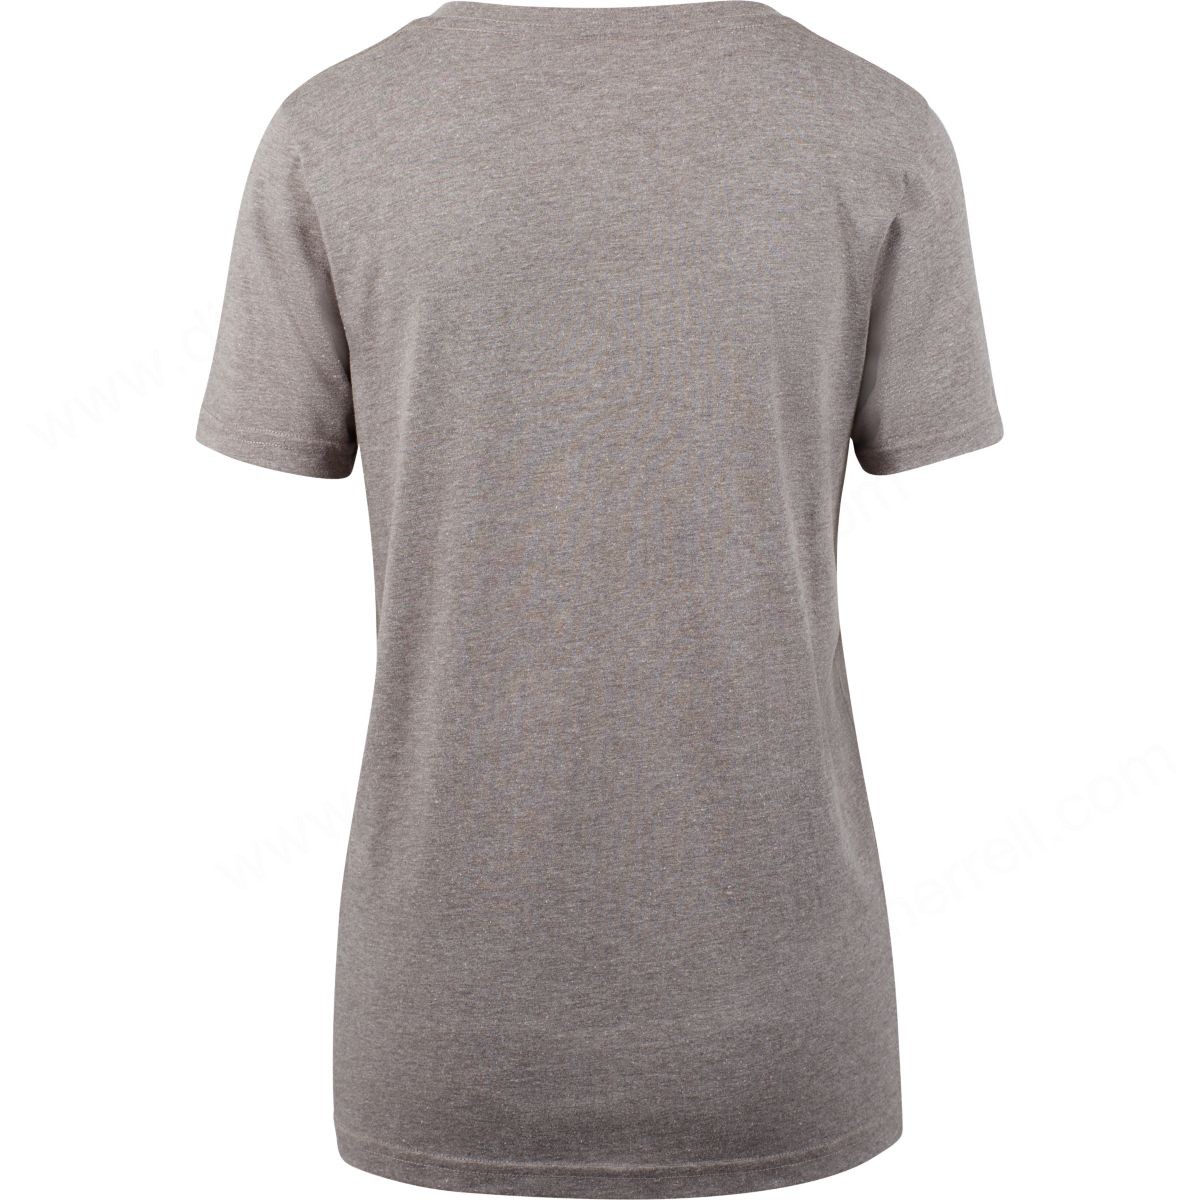 Merrell Womens's Echo Tshirt Grey - -1